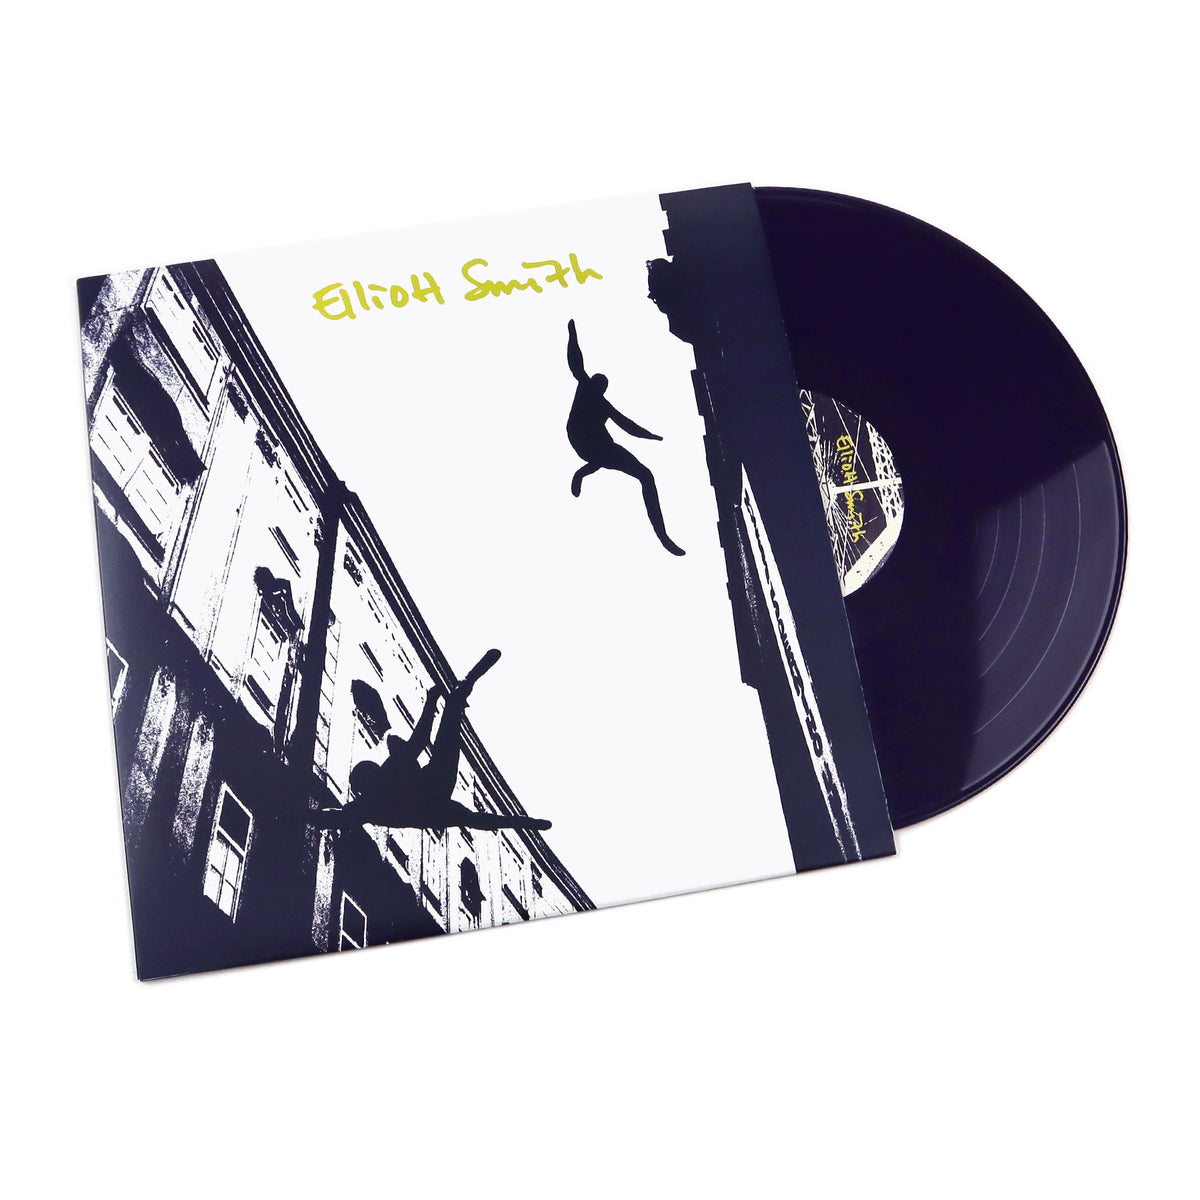 Elliott Smith: Elliott Smith - 25th Anniversary Edition (Indie Exclusive Colored Vinyl) Vinyl LP